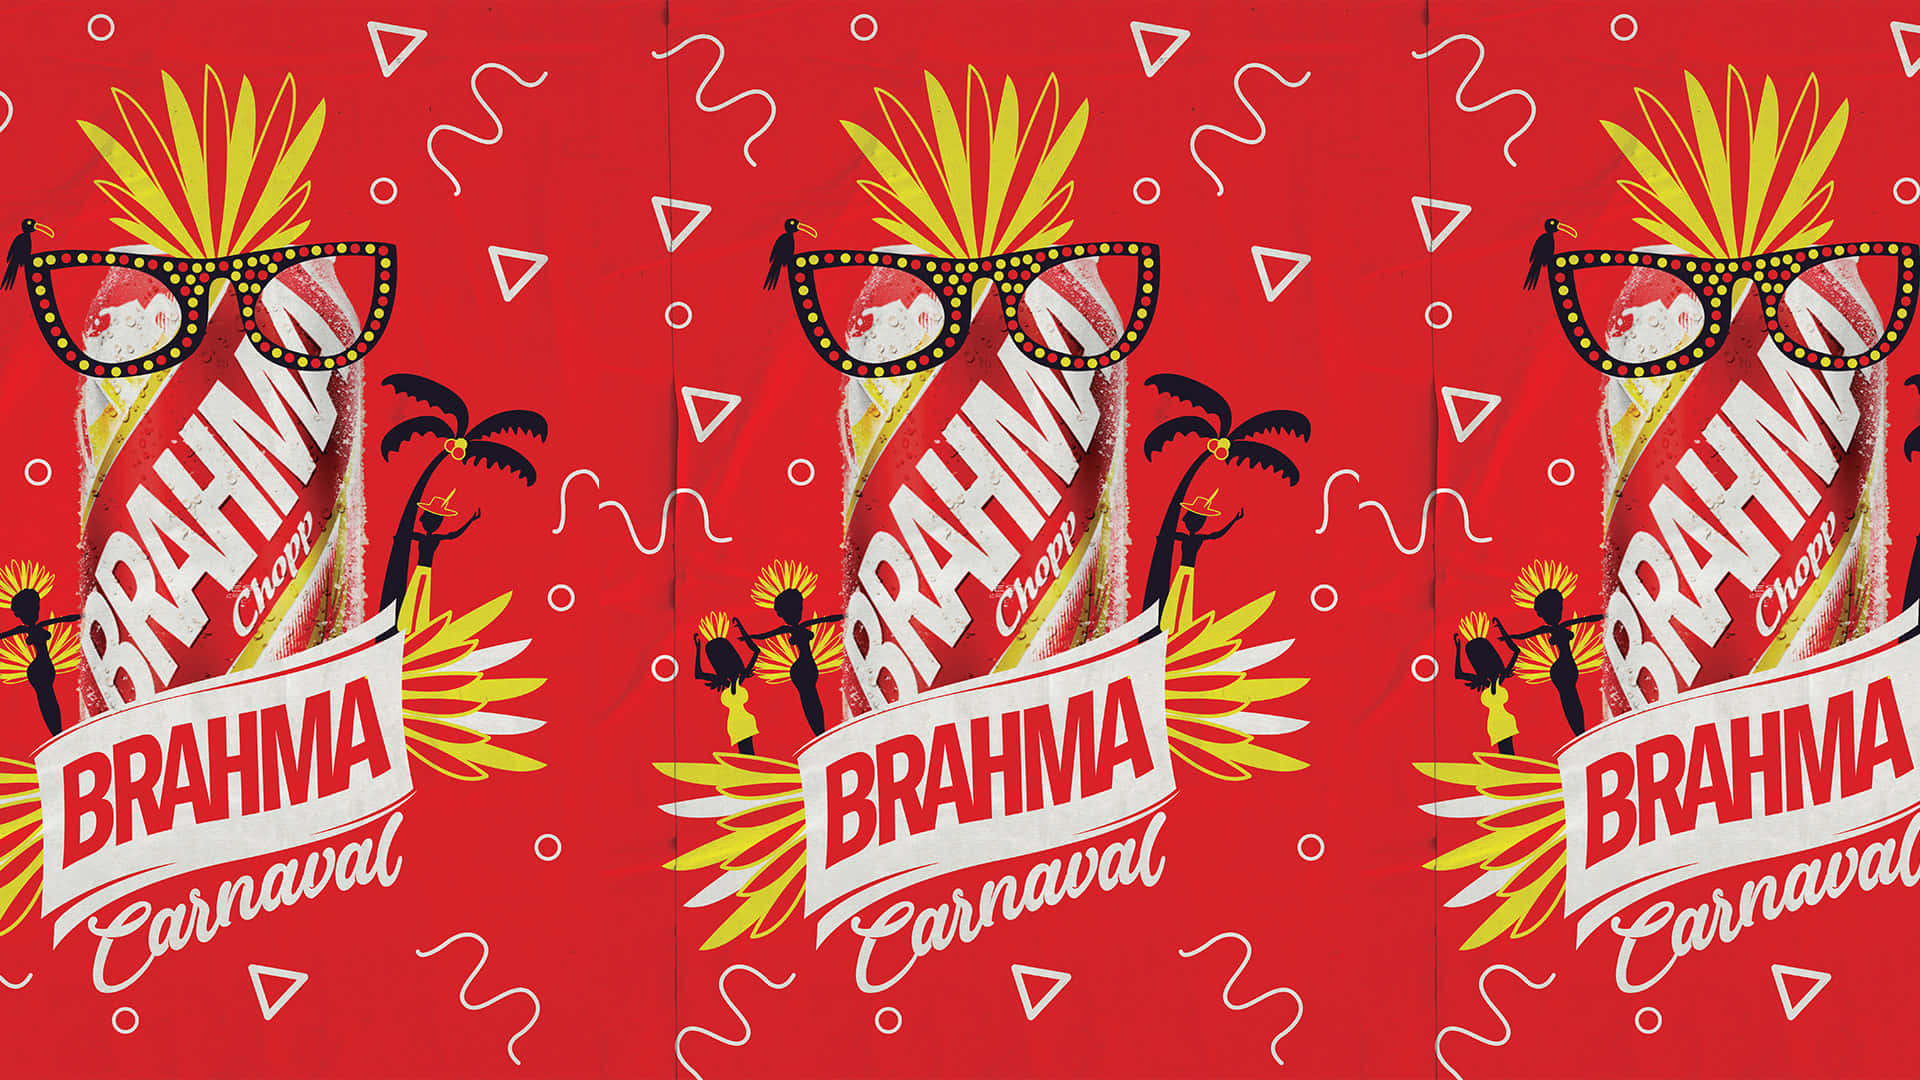 Brasilianischesbrahma Chopp Bierdosen Karnevalsposter Wallpaper